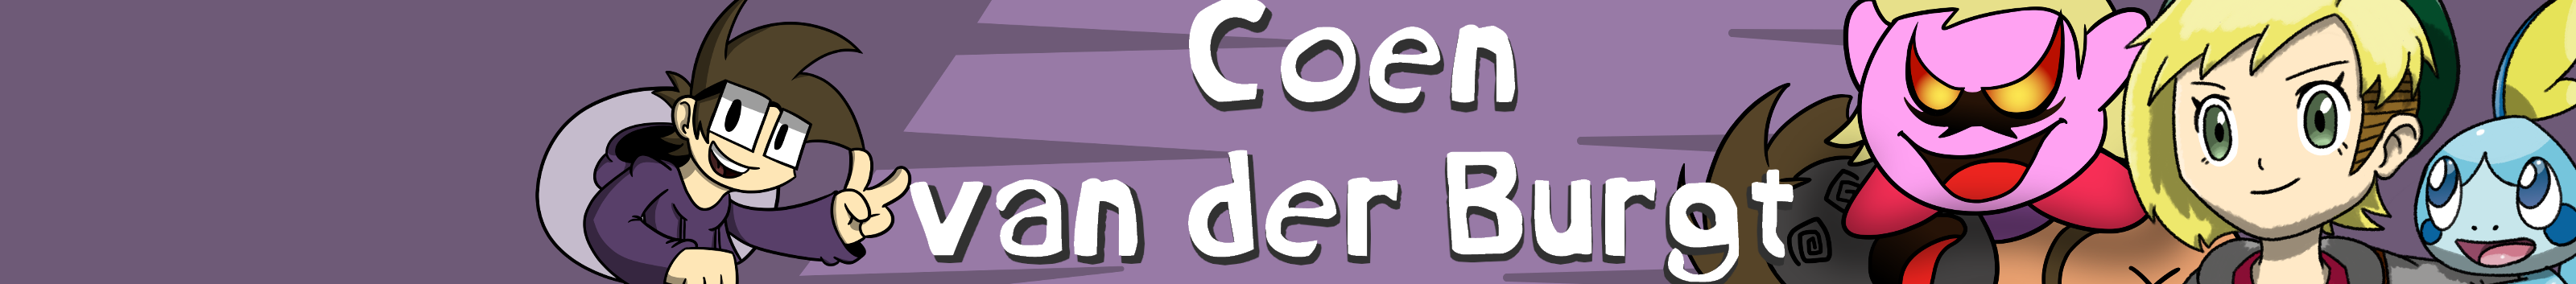 Bannière de profil de Coen van der Burgt